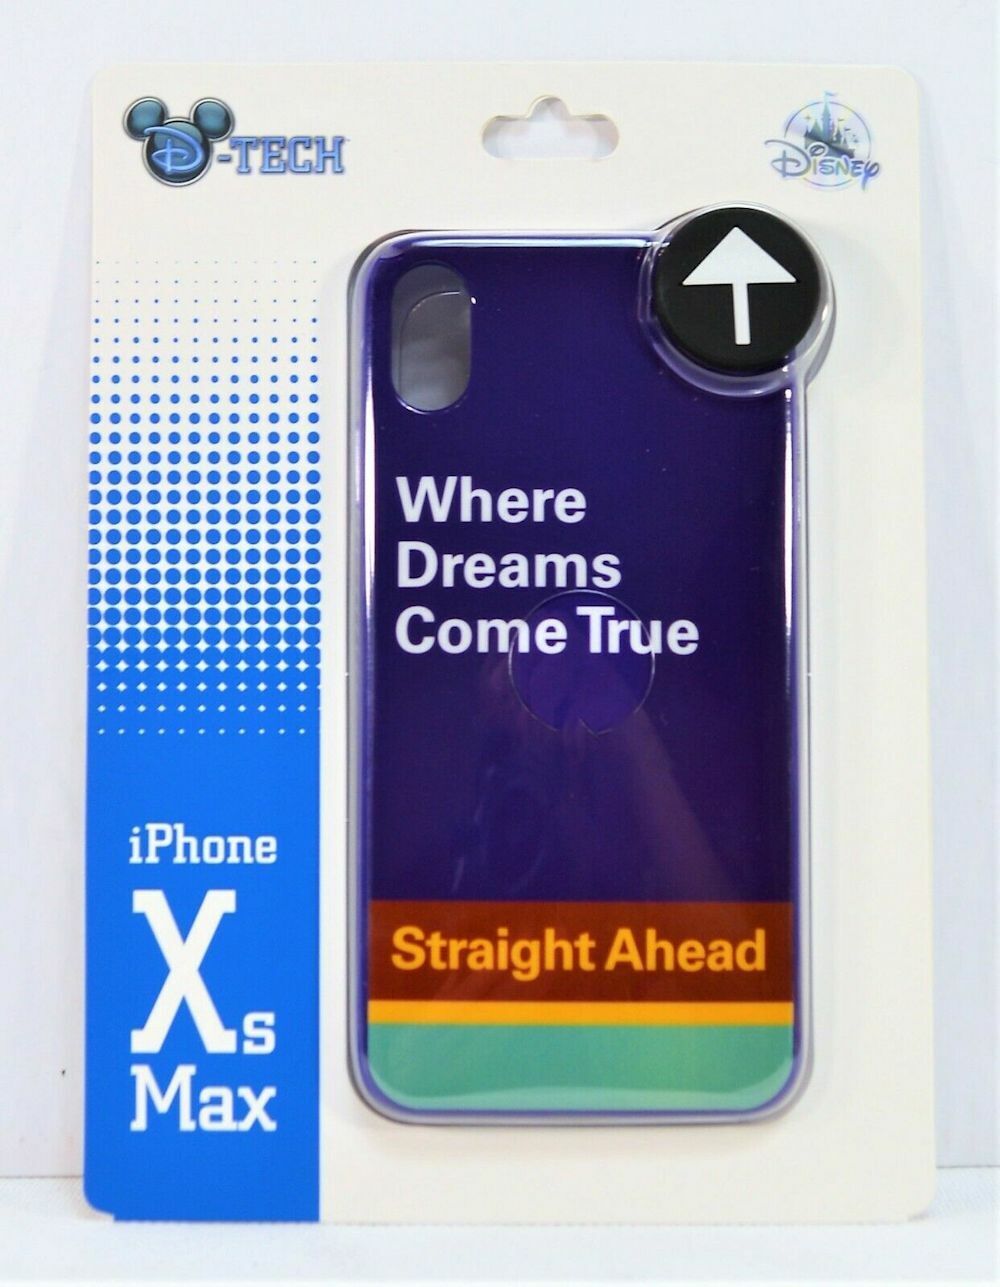 Disney Parks D-Tech Where Dreams Come True iPhone Xs Max Phone Case New